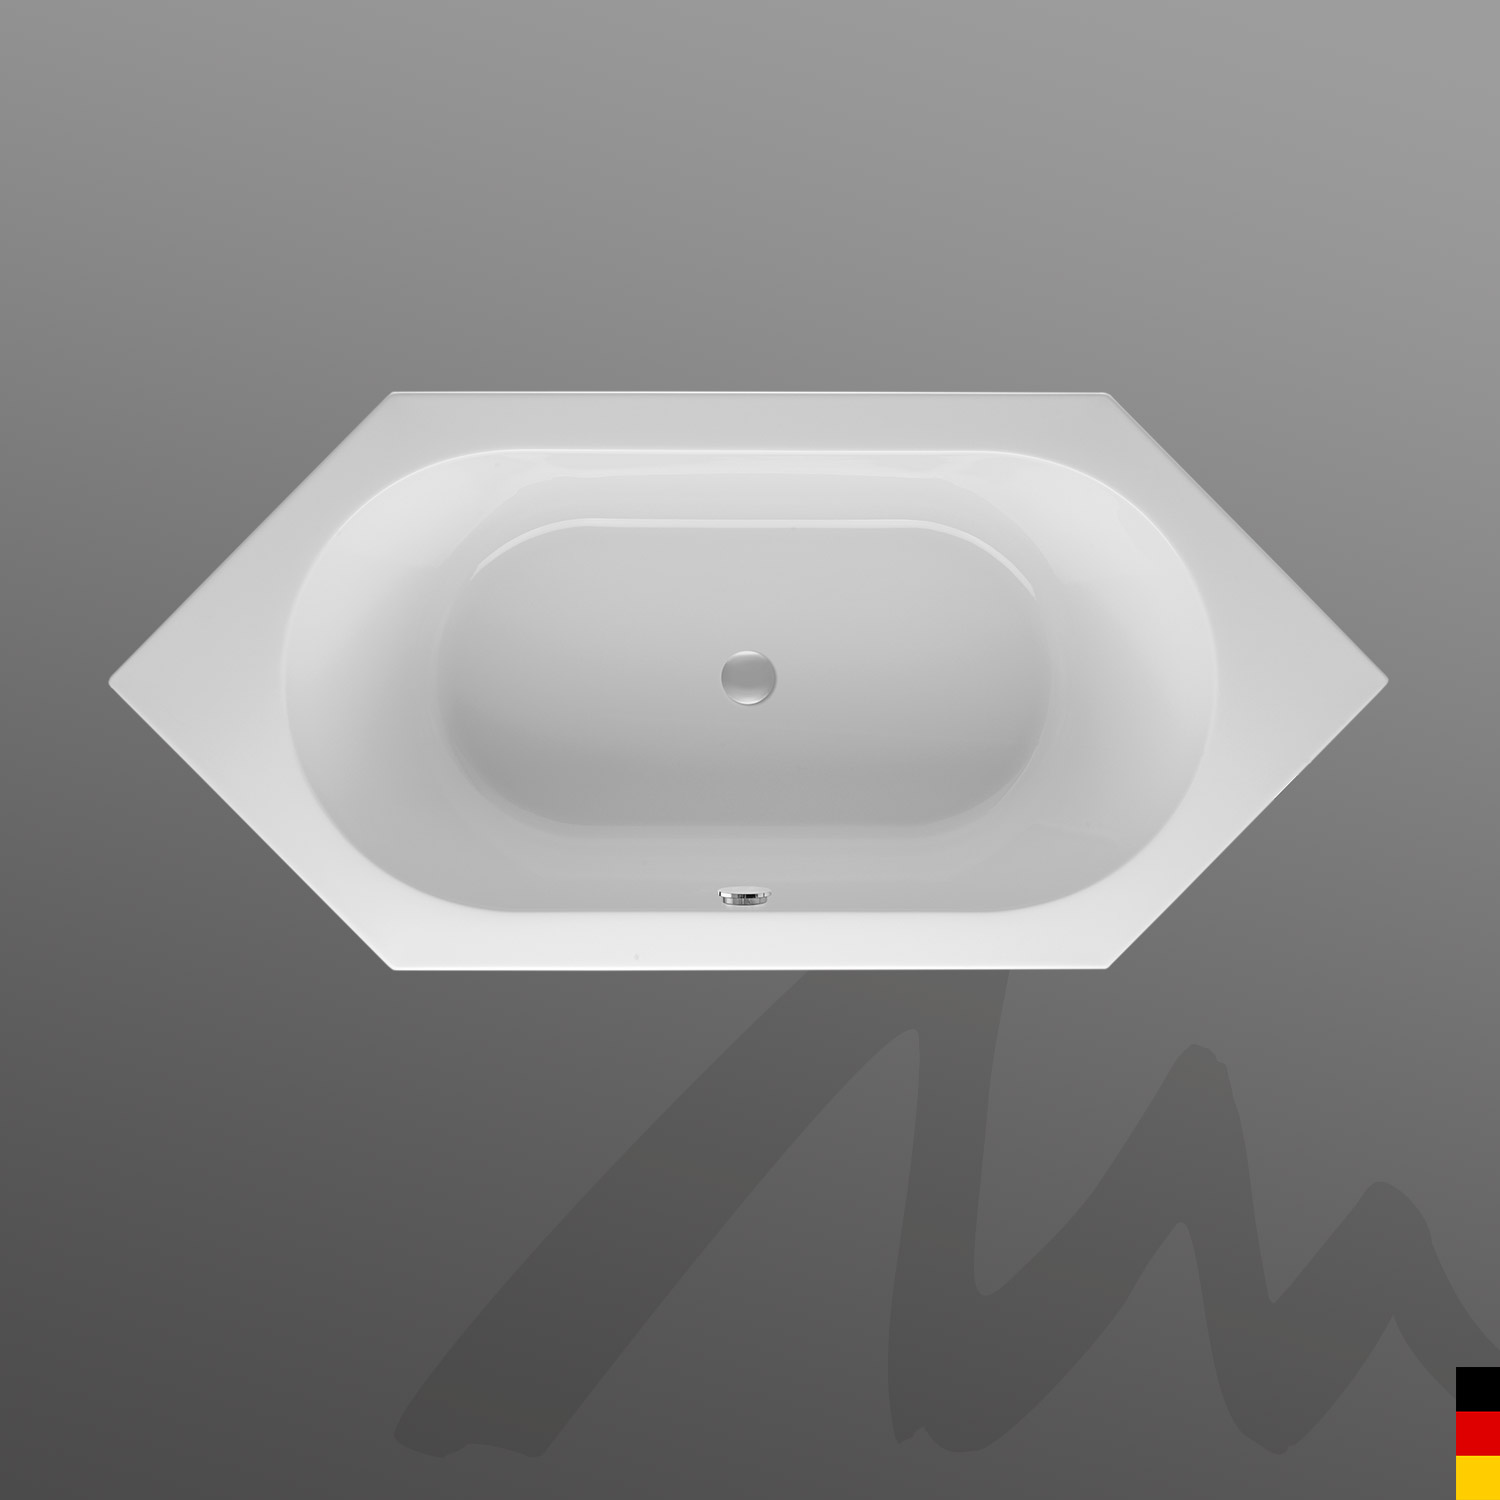 Mauersberger Badewanne 6-Eck Ovata 190/85  190x85x45cm  Farbe:weiß